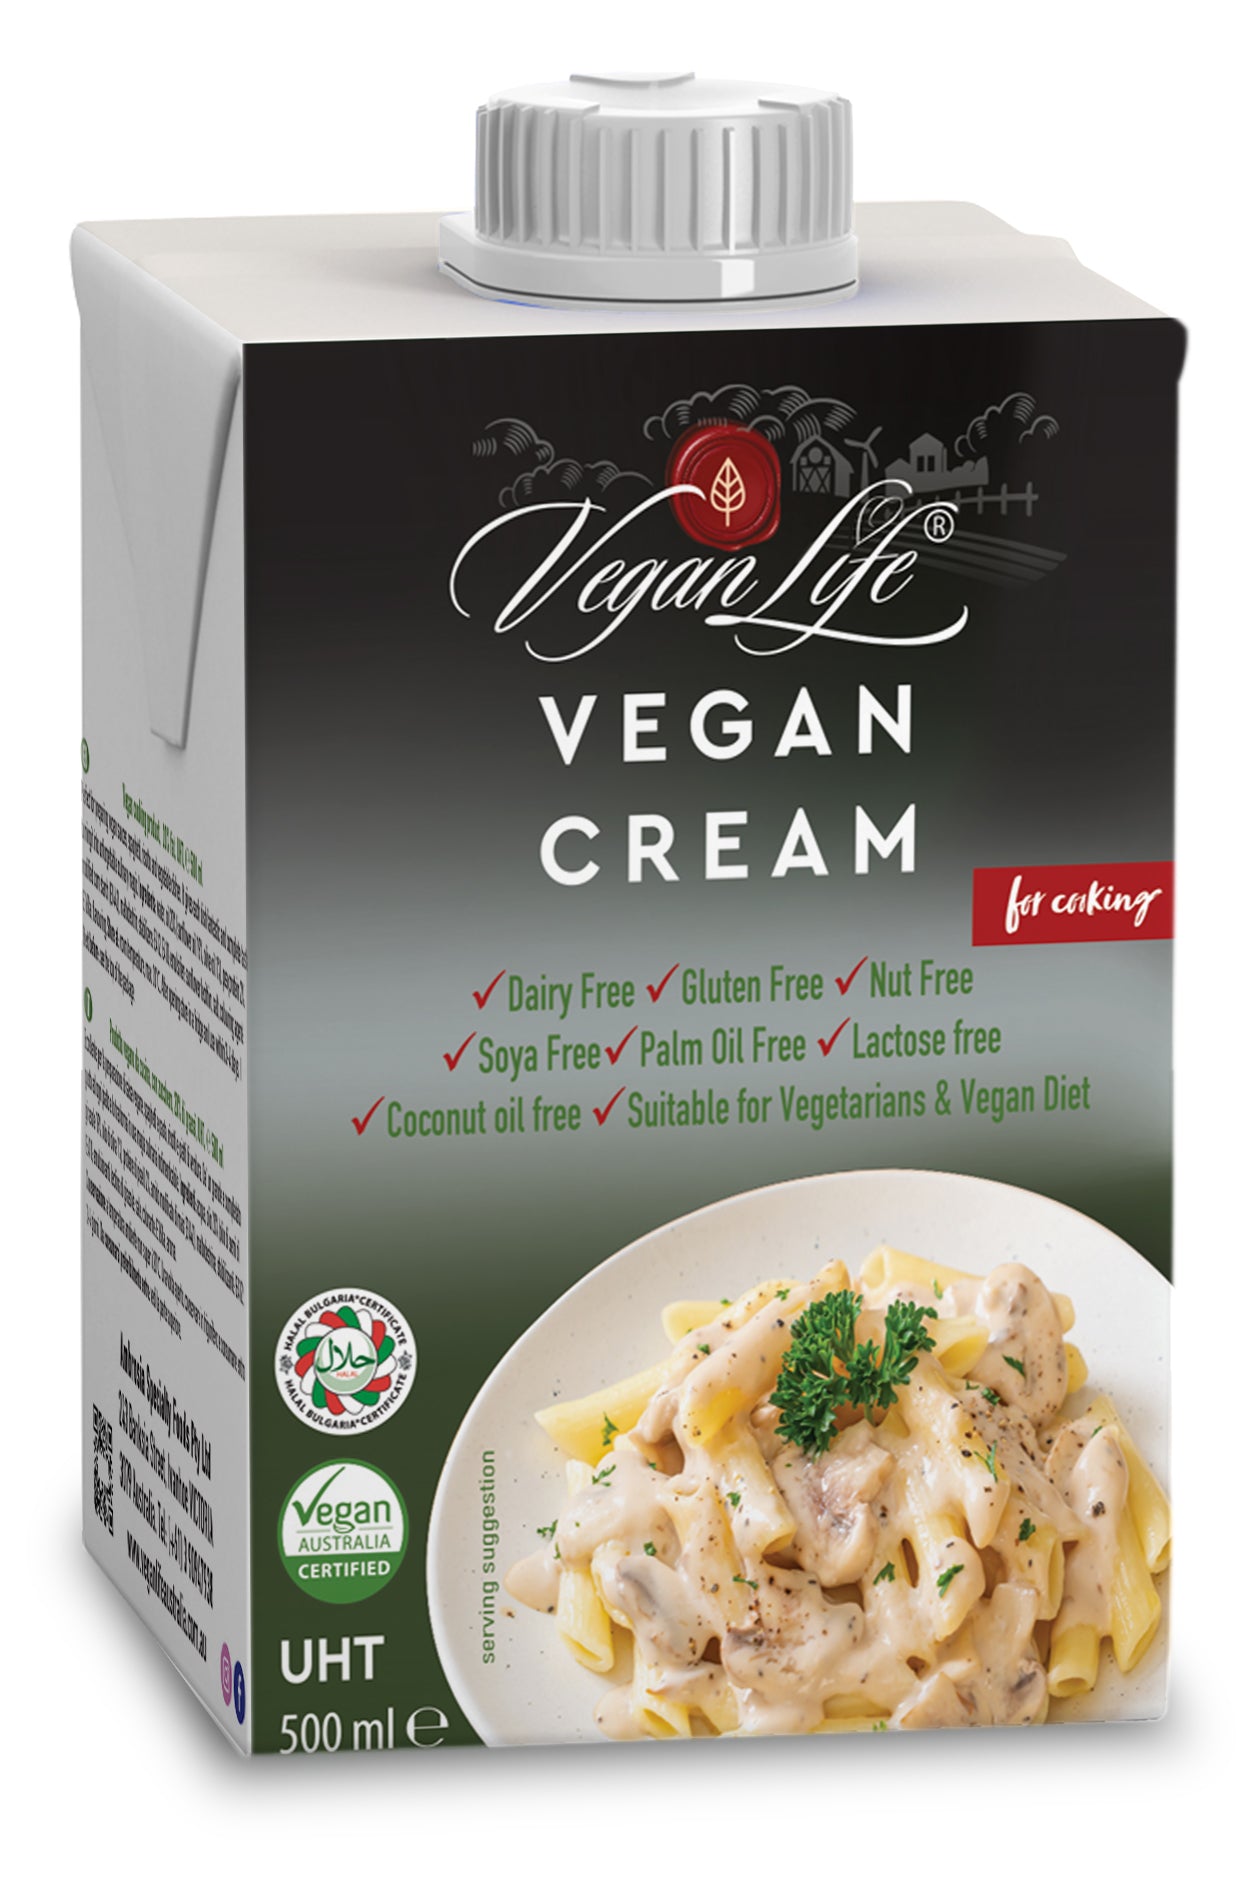 Vegan Life Cooking Vegan Cream